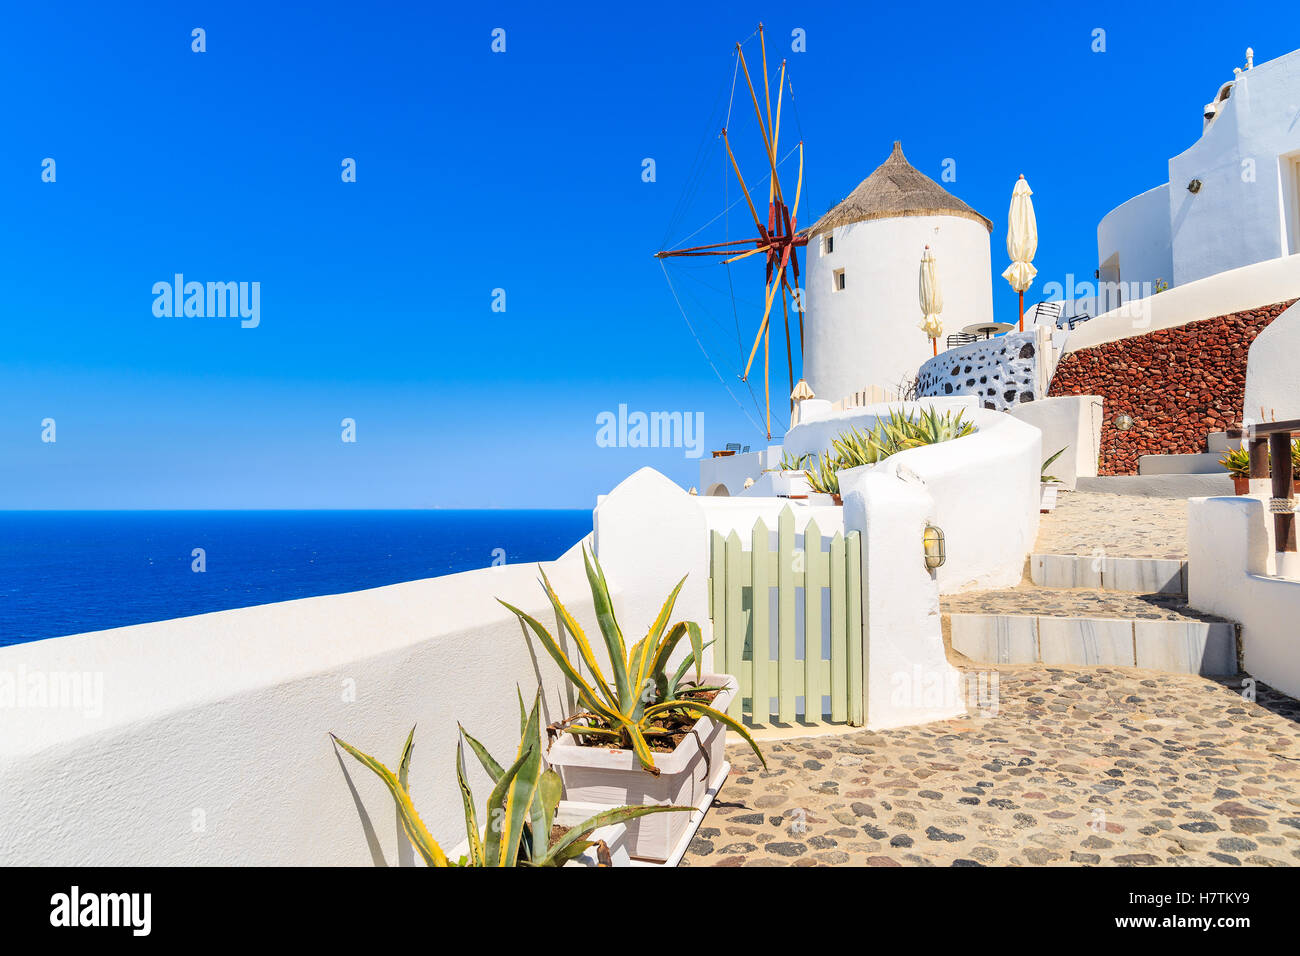 Typical white windmill on street of Oia village, Santorini island, Greece Stock Photo